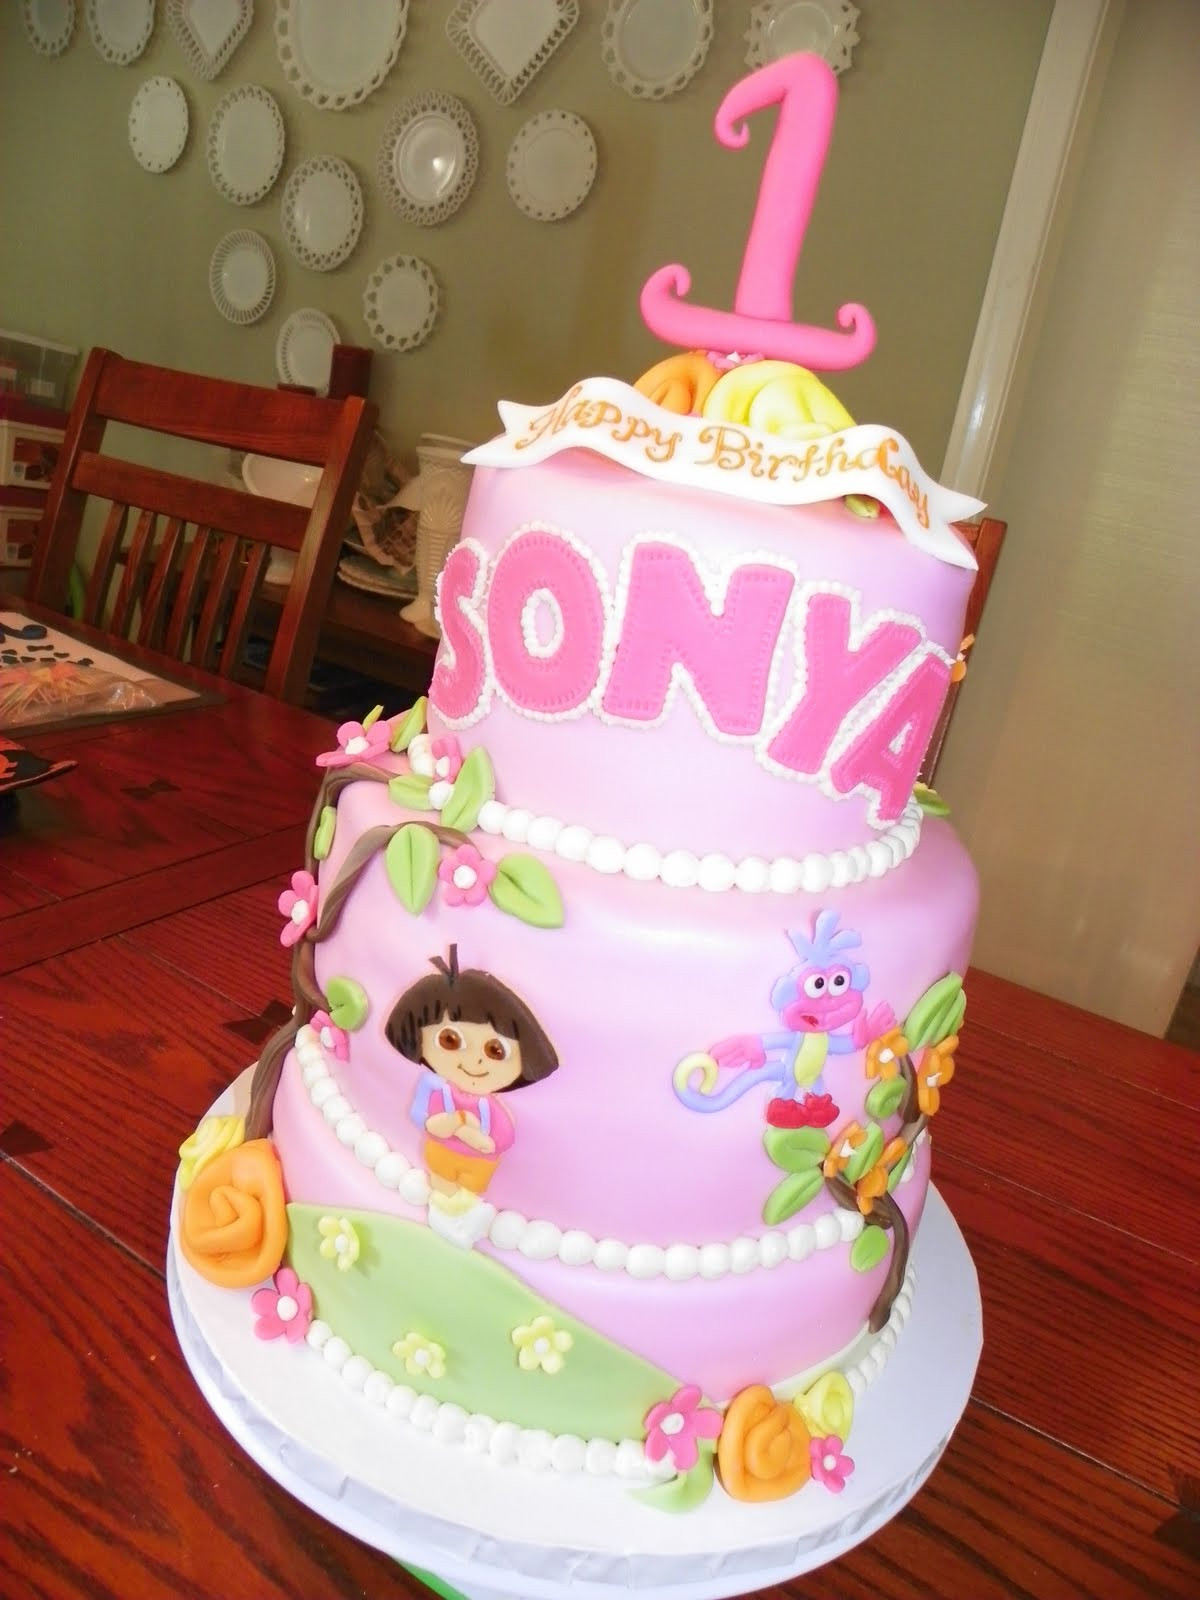 Dora The Explorer Birthday Cakes
 Plumeria Cake Studio Dora the Explorer Birthday Cake